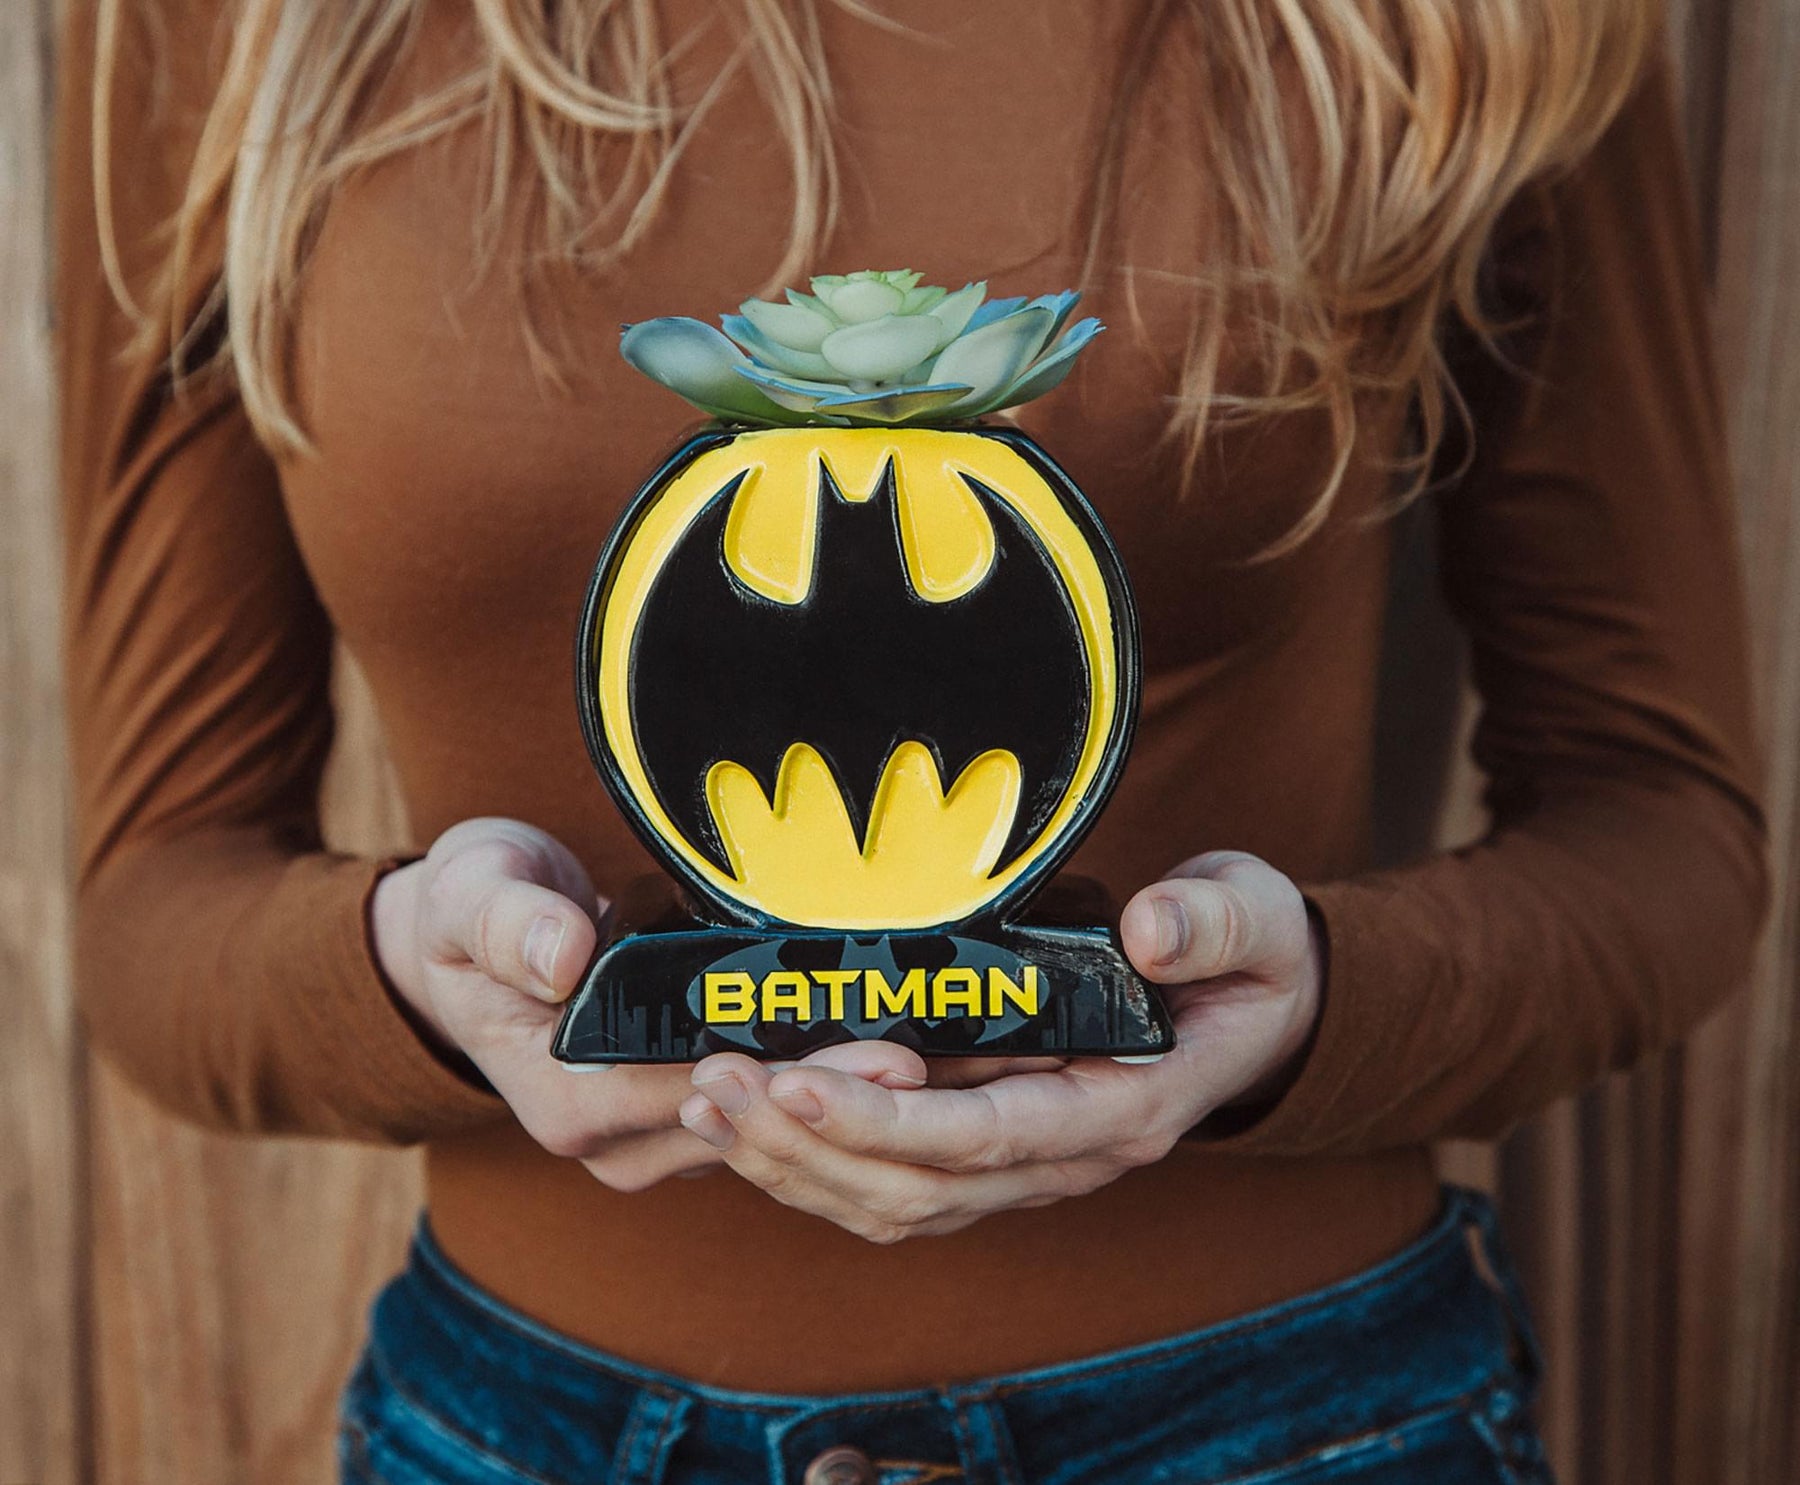 Batman Bat Logo 9-Inch Ceramic Planter With Artificial Succulent